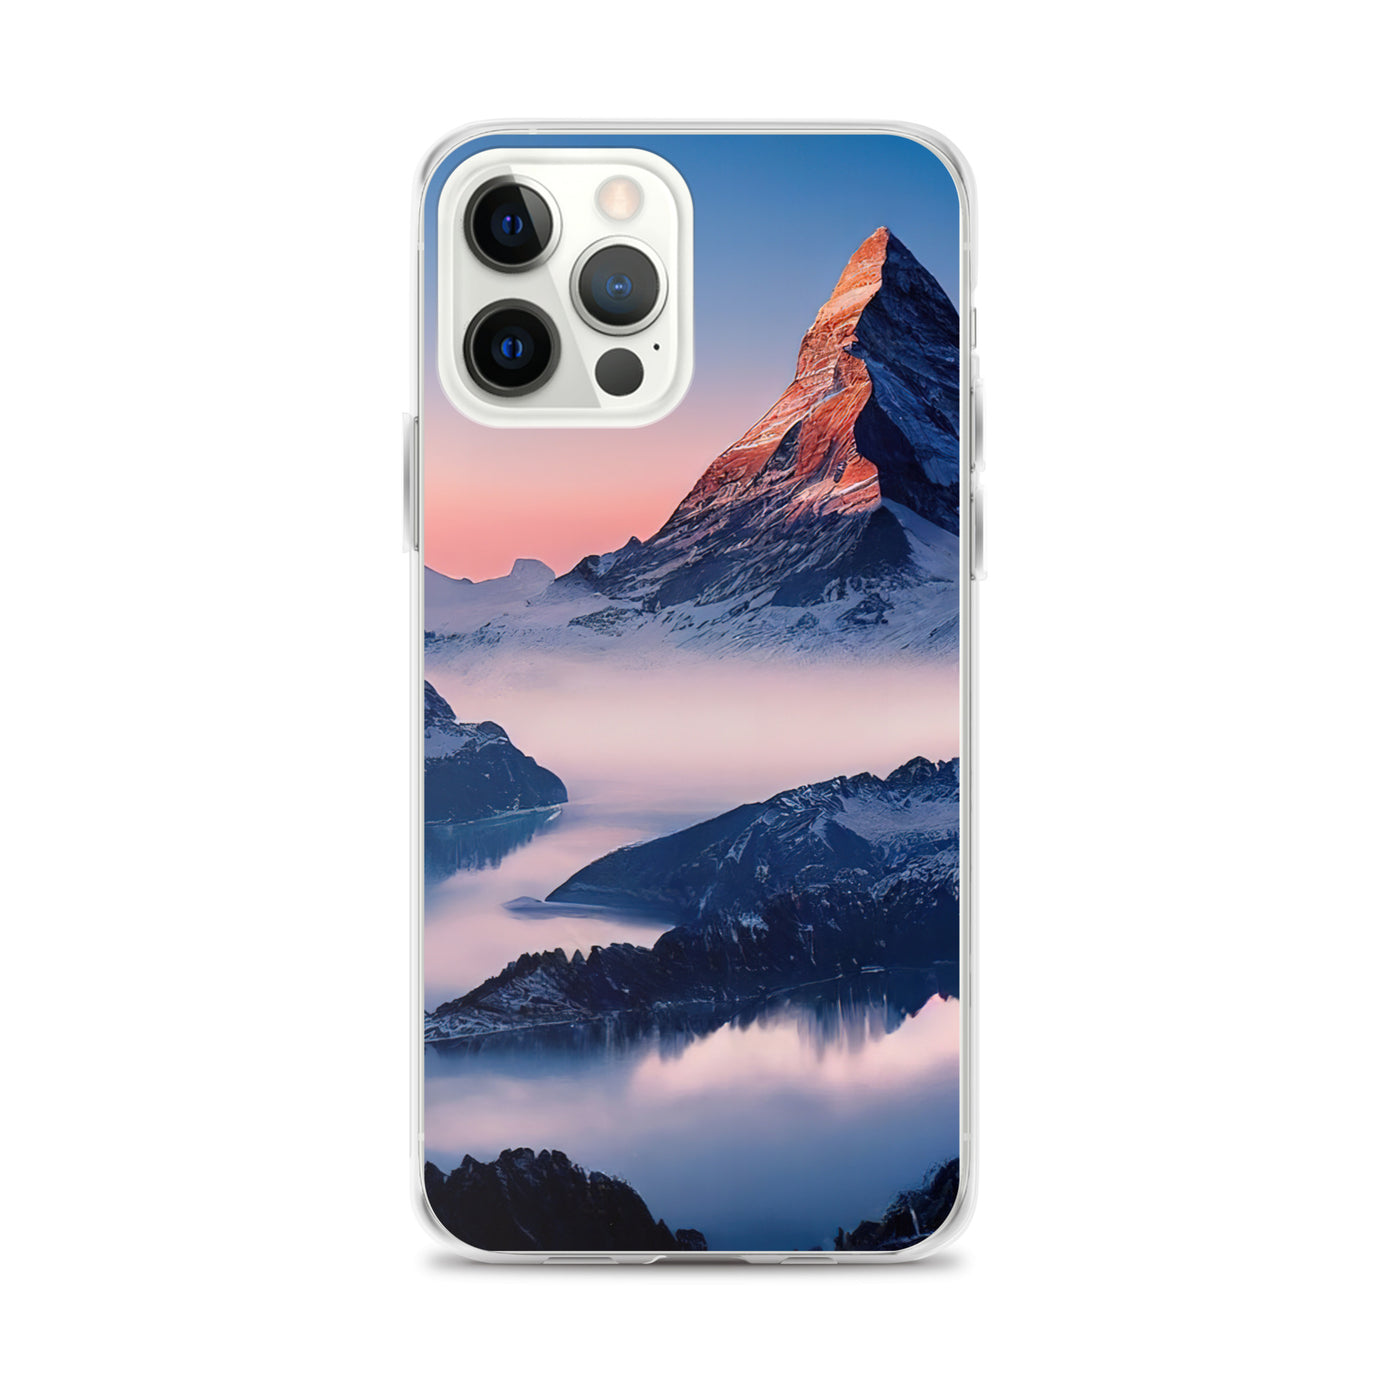 Matternhorn - Nebel - Berglandschaft - Malerei - iPhone Schutzhülle (durchsichtig) berge xxx iPhone 12 Pro Max